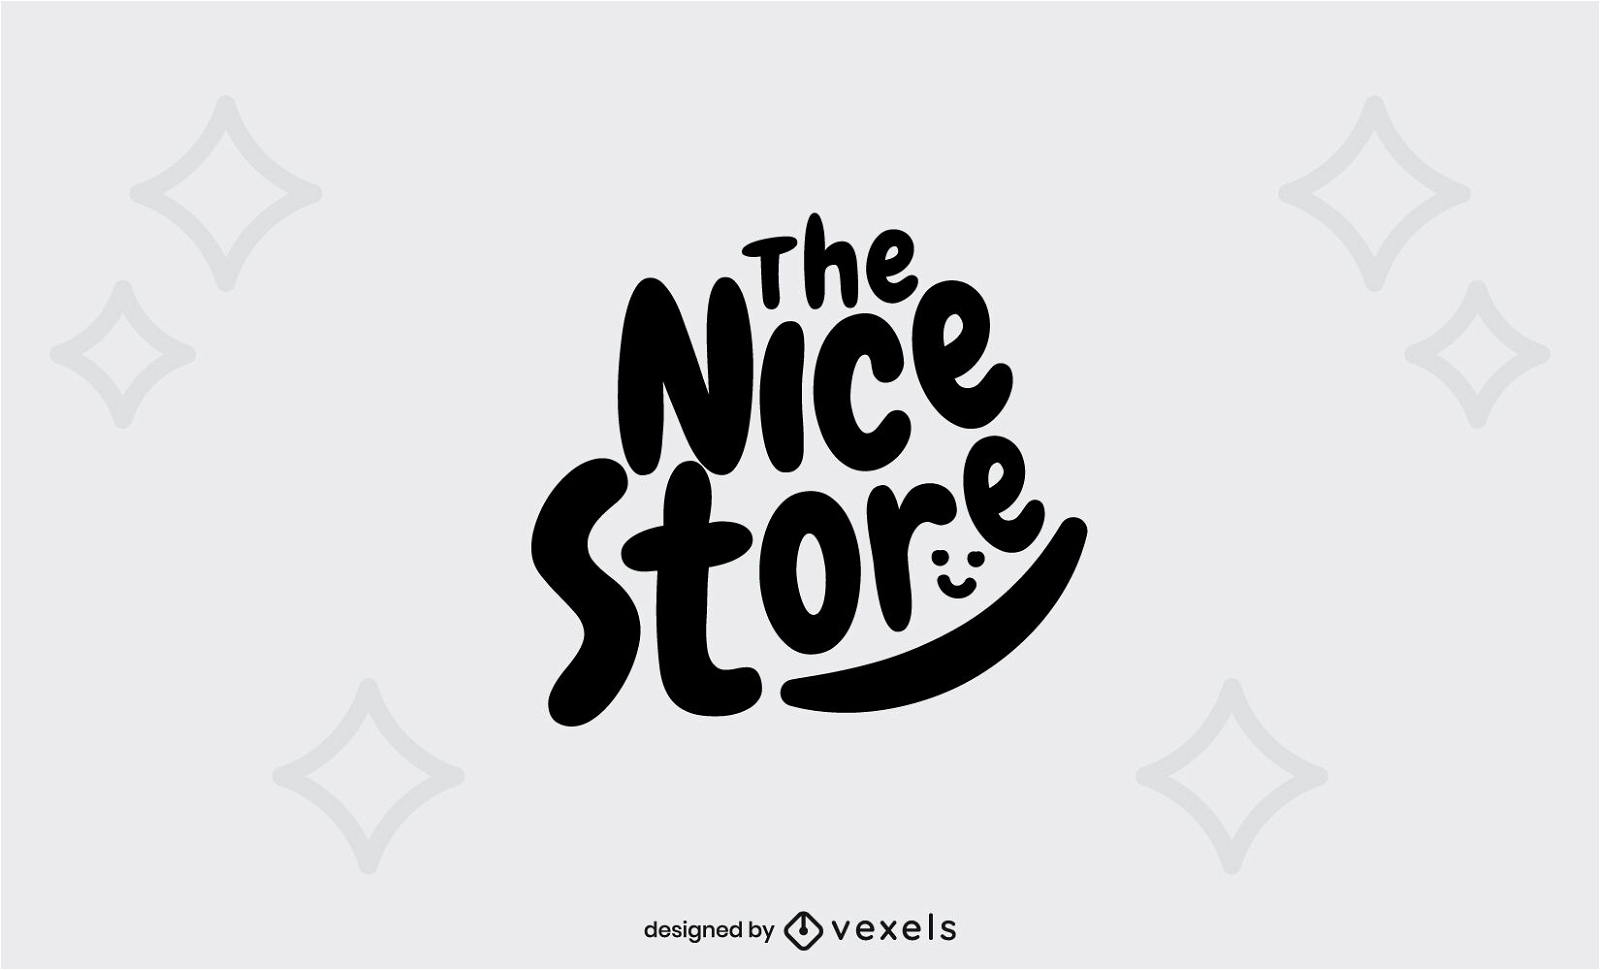 designer store logos